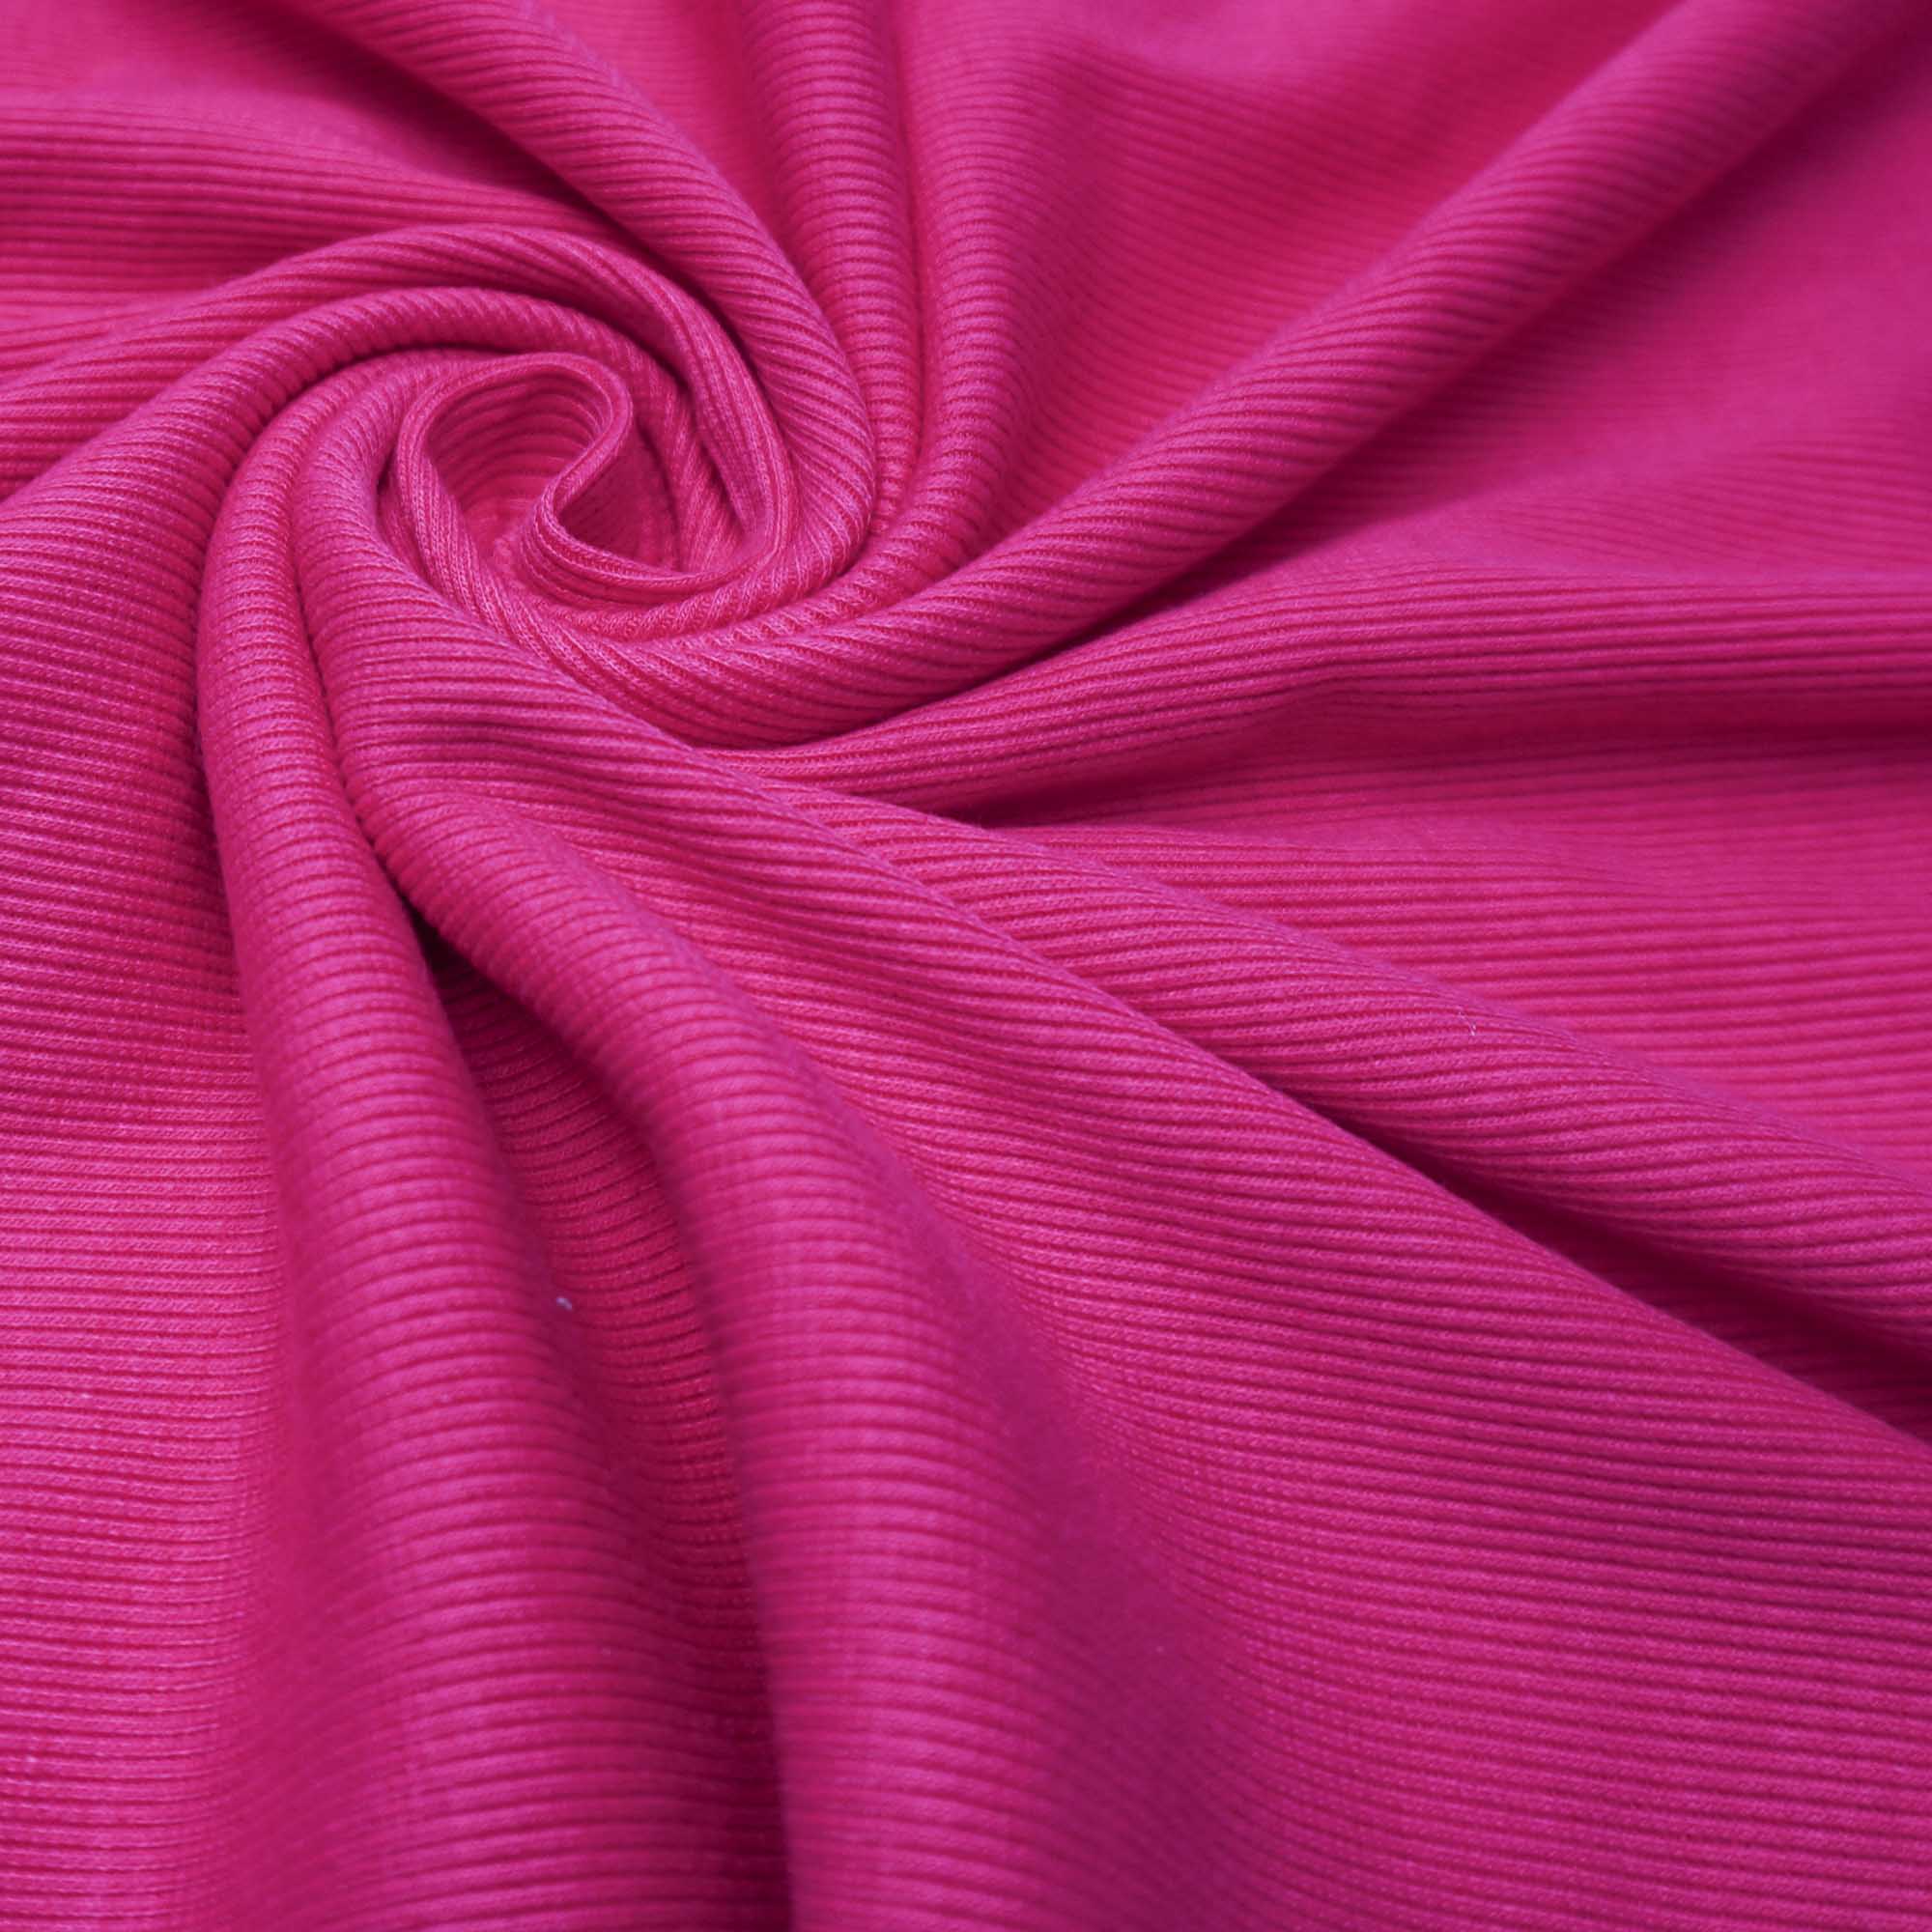 Tecido ribana (malha) rosa chiclete